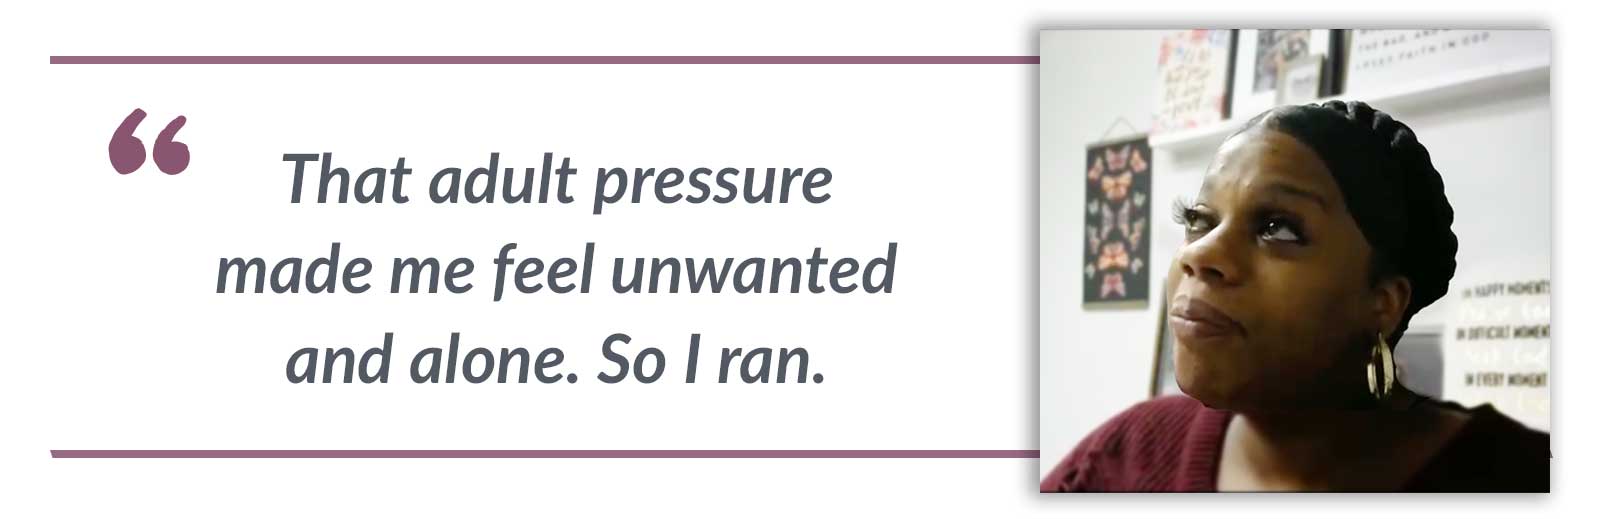 That adult pressure made me feel unwanted and alone. So I ran.-Lanisha